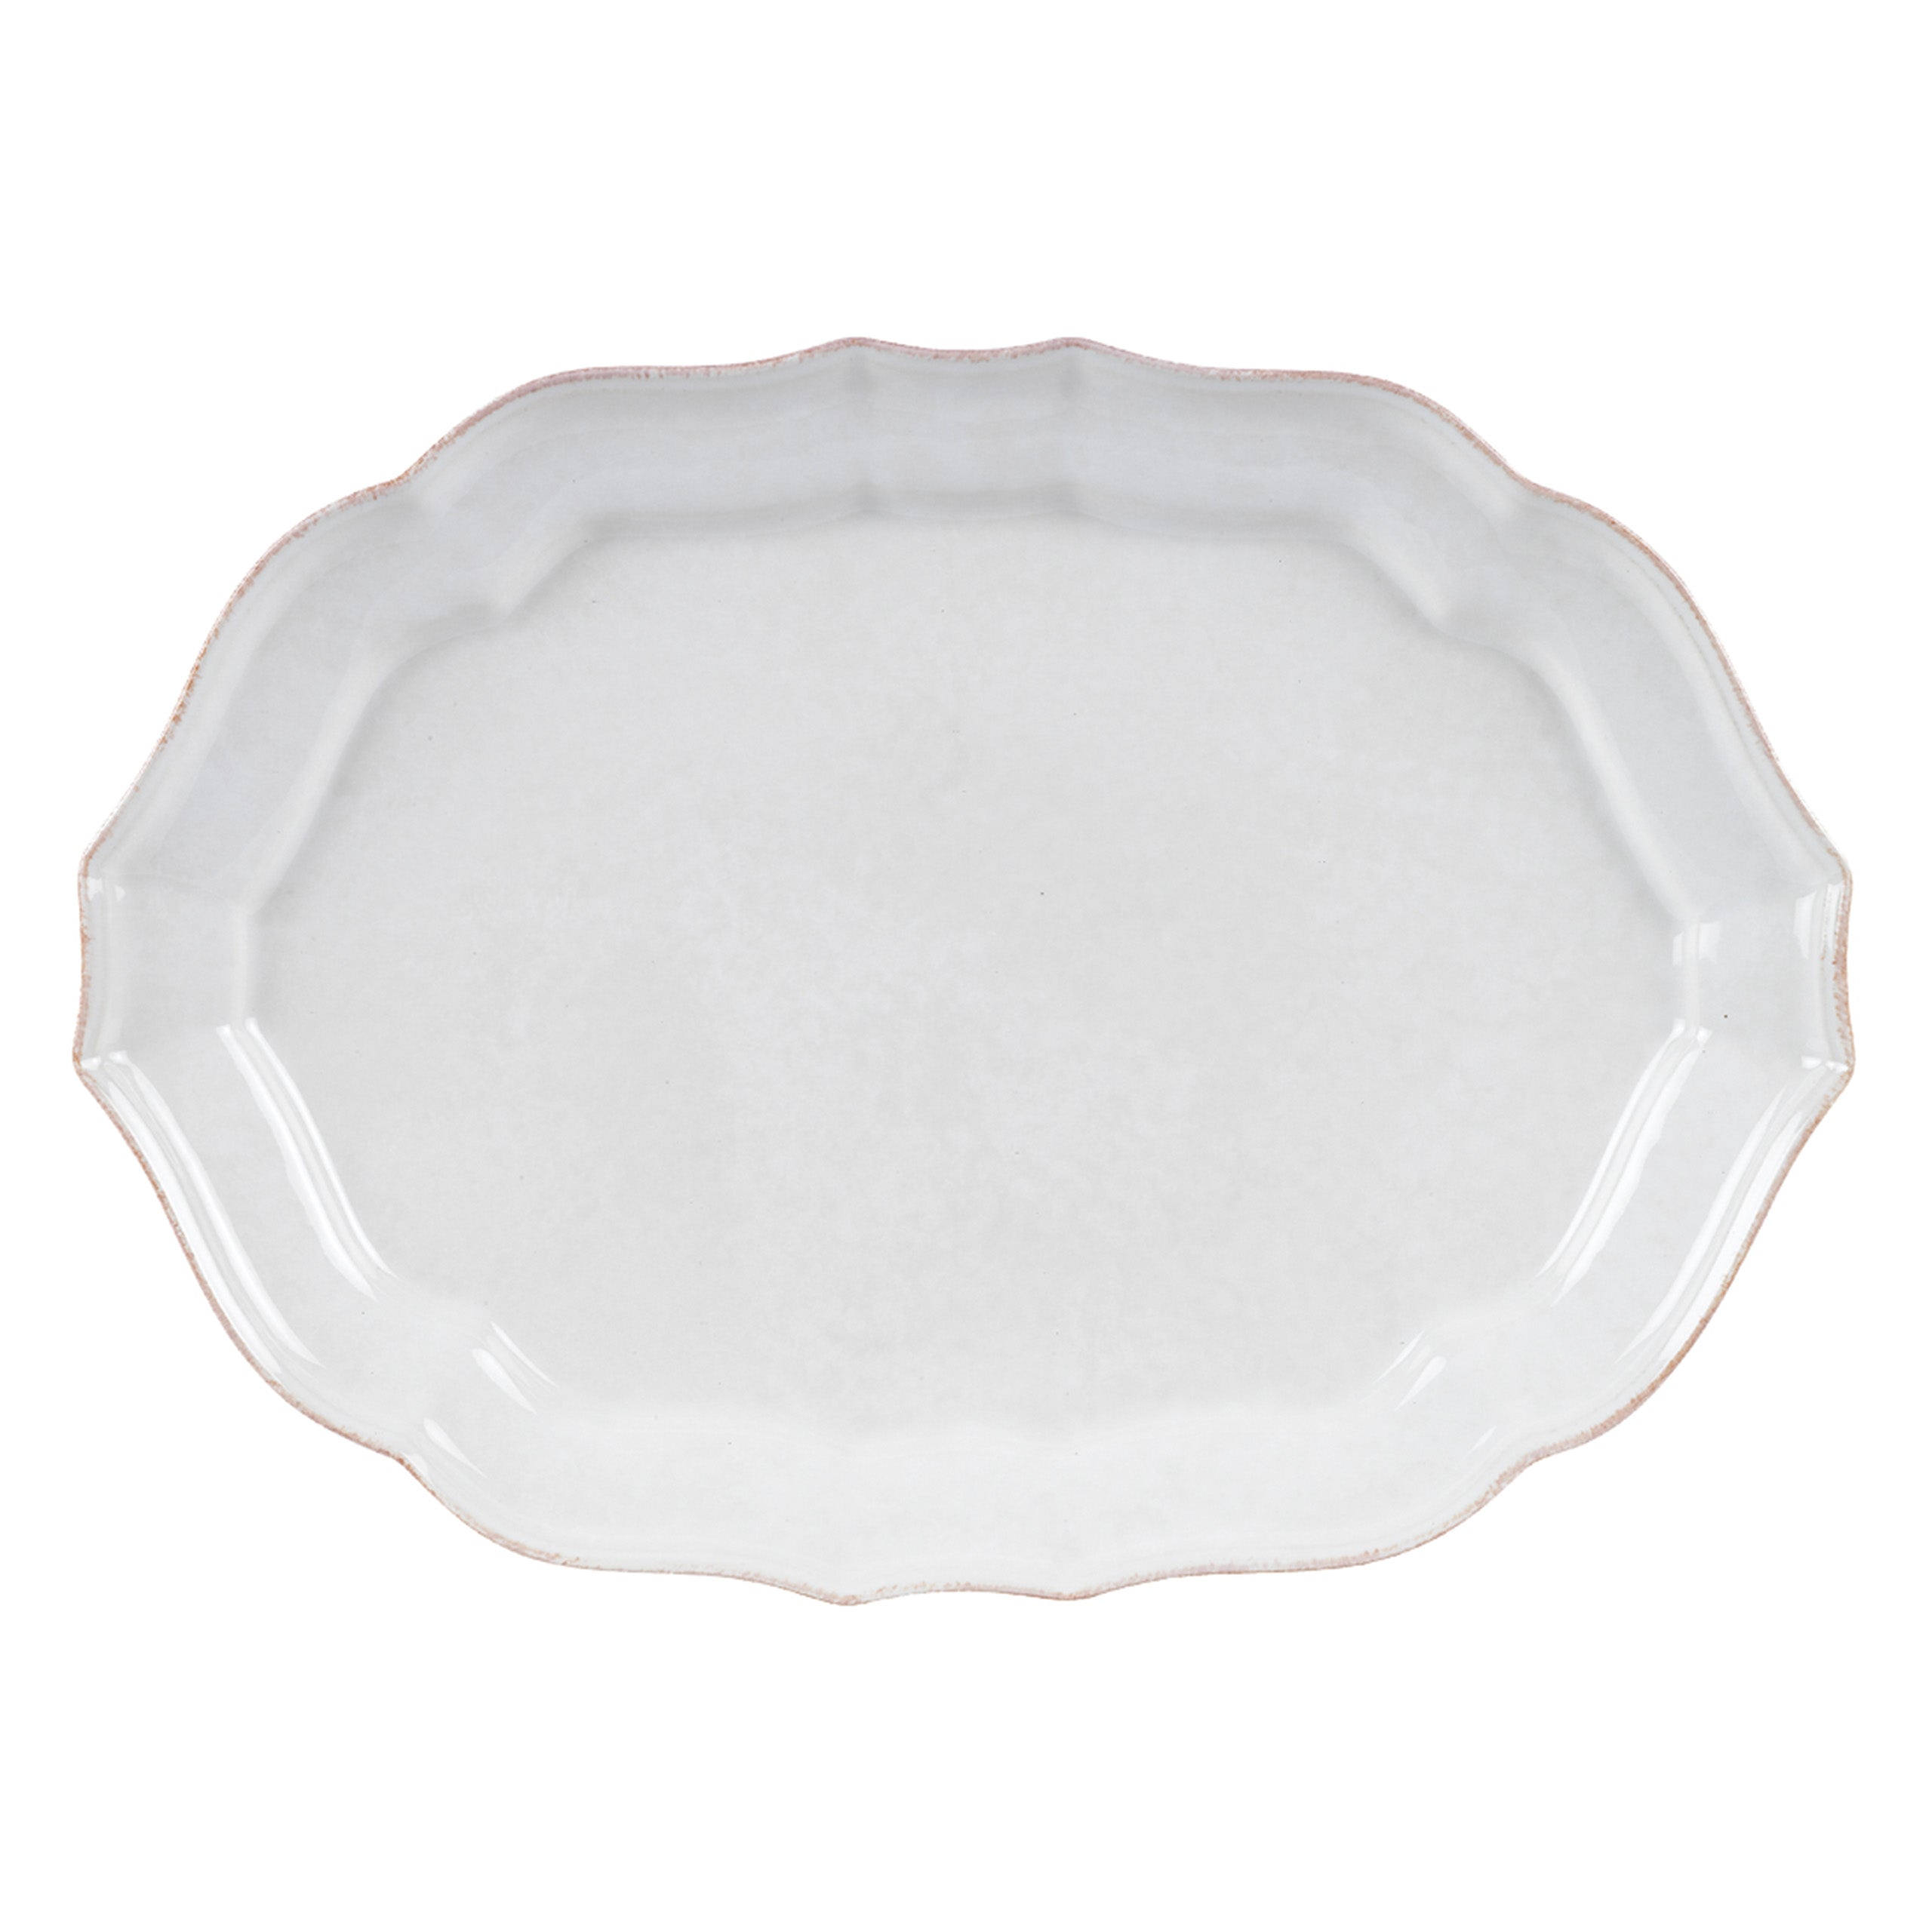 Impressions Oval Platter 18" White